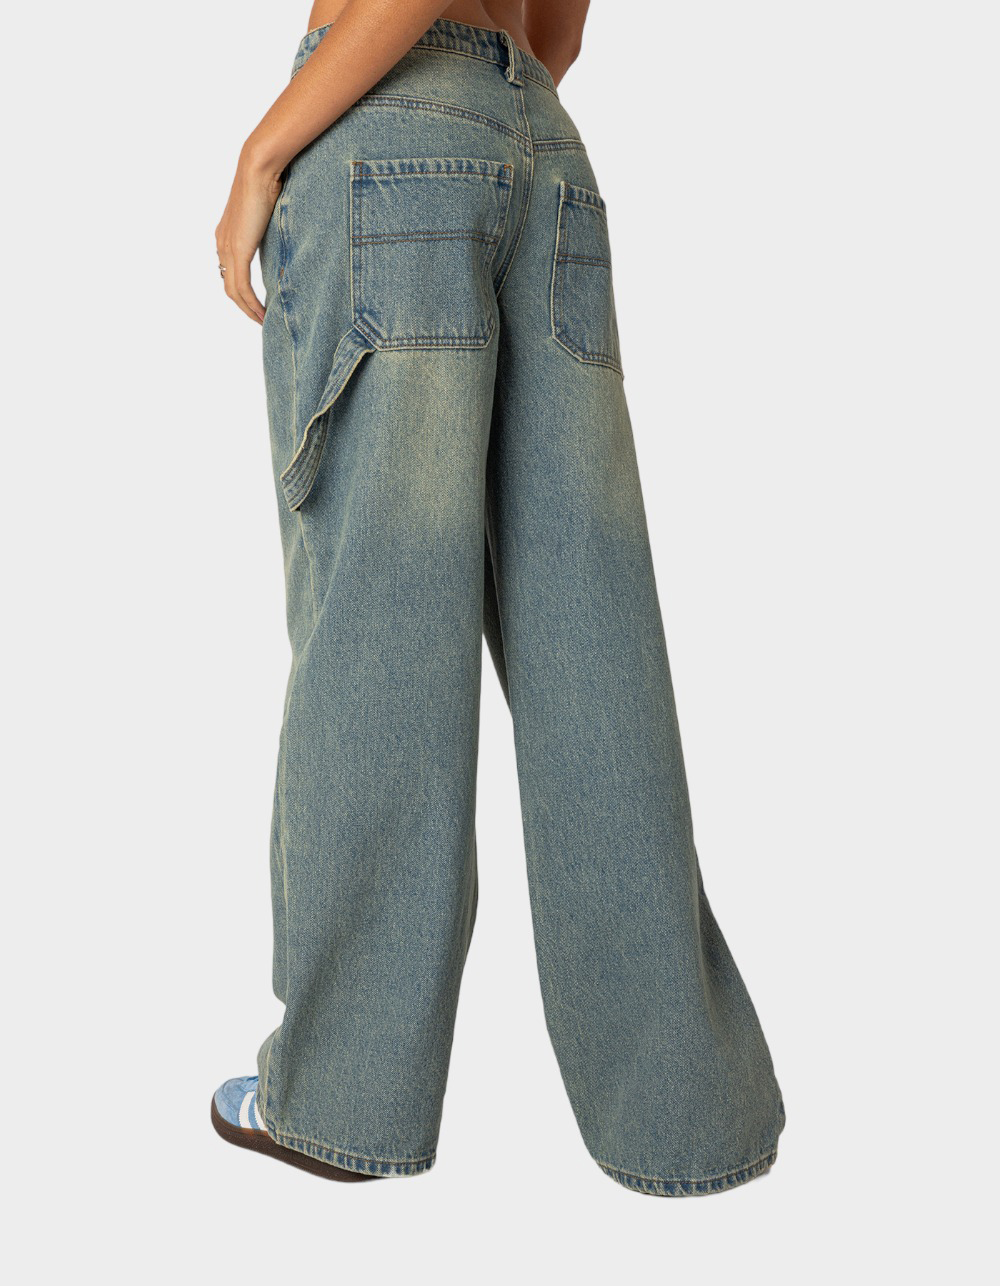 EDIKTED Carpenter Low-Rise Womens Jeans - LIGHT BLUE | Tillys